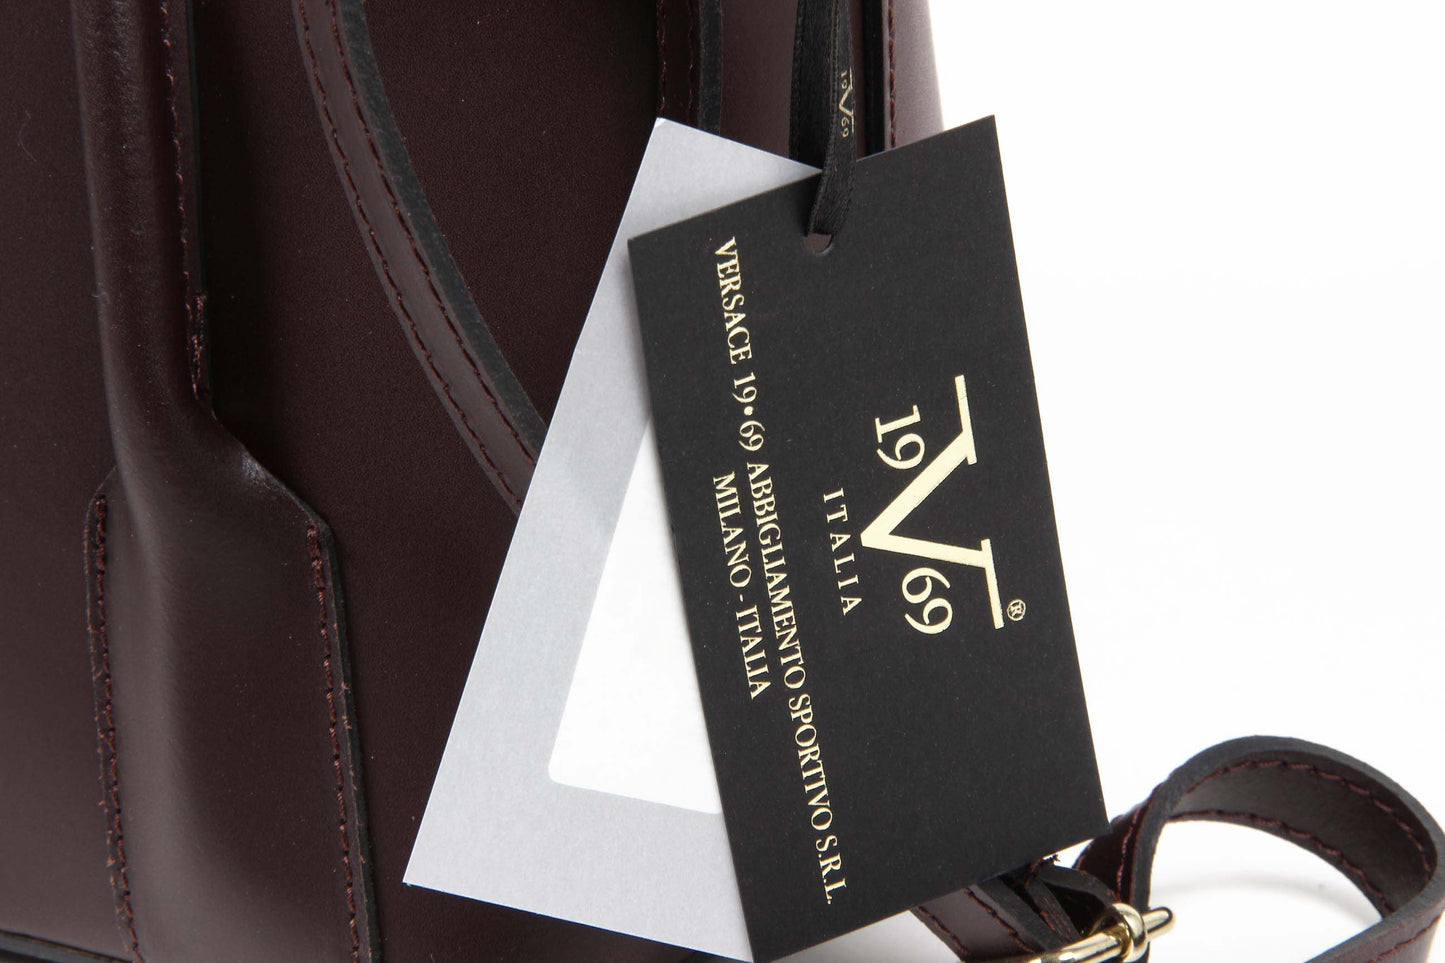 By Versace 19.69 Abbigliamento Sportivo Srl Milano Italia - Detalle: V020 RUGA BORDO' - Colore: Burdeos - Composición: 100% P